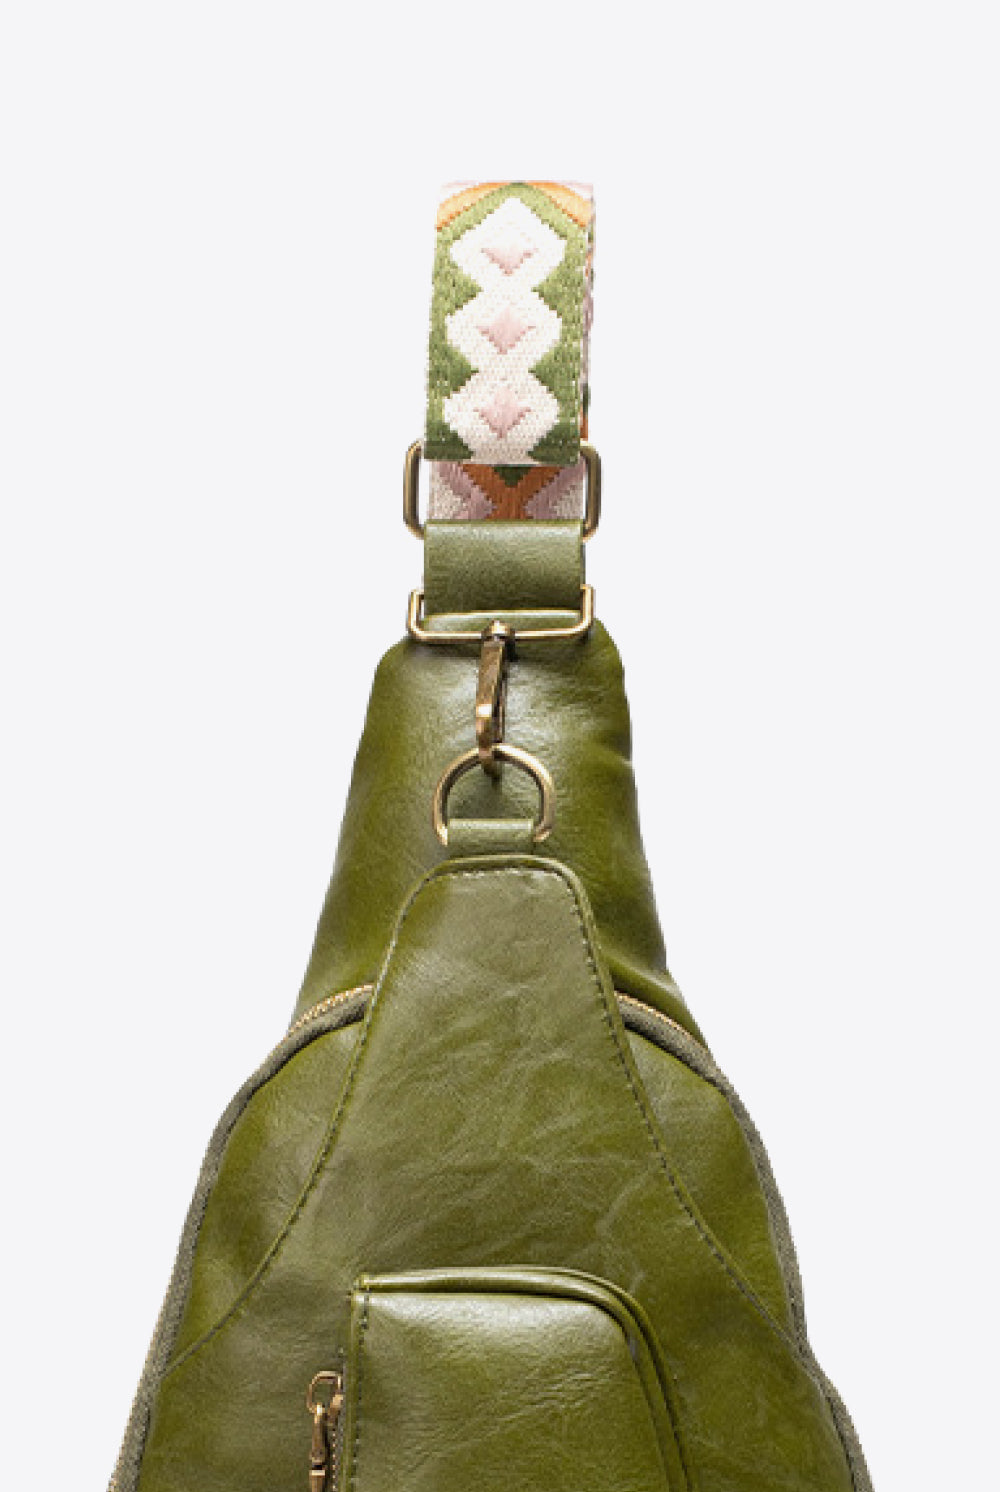 Dark Olive Green All The Feels PU Leather Sling Bag Handbags